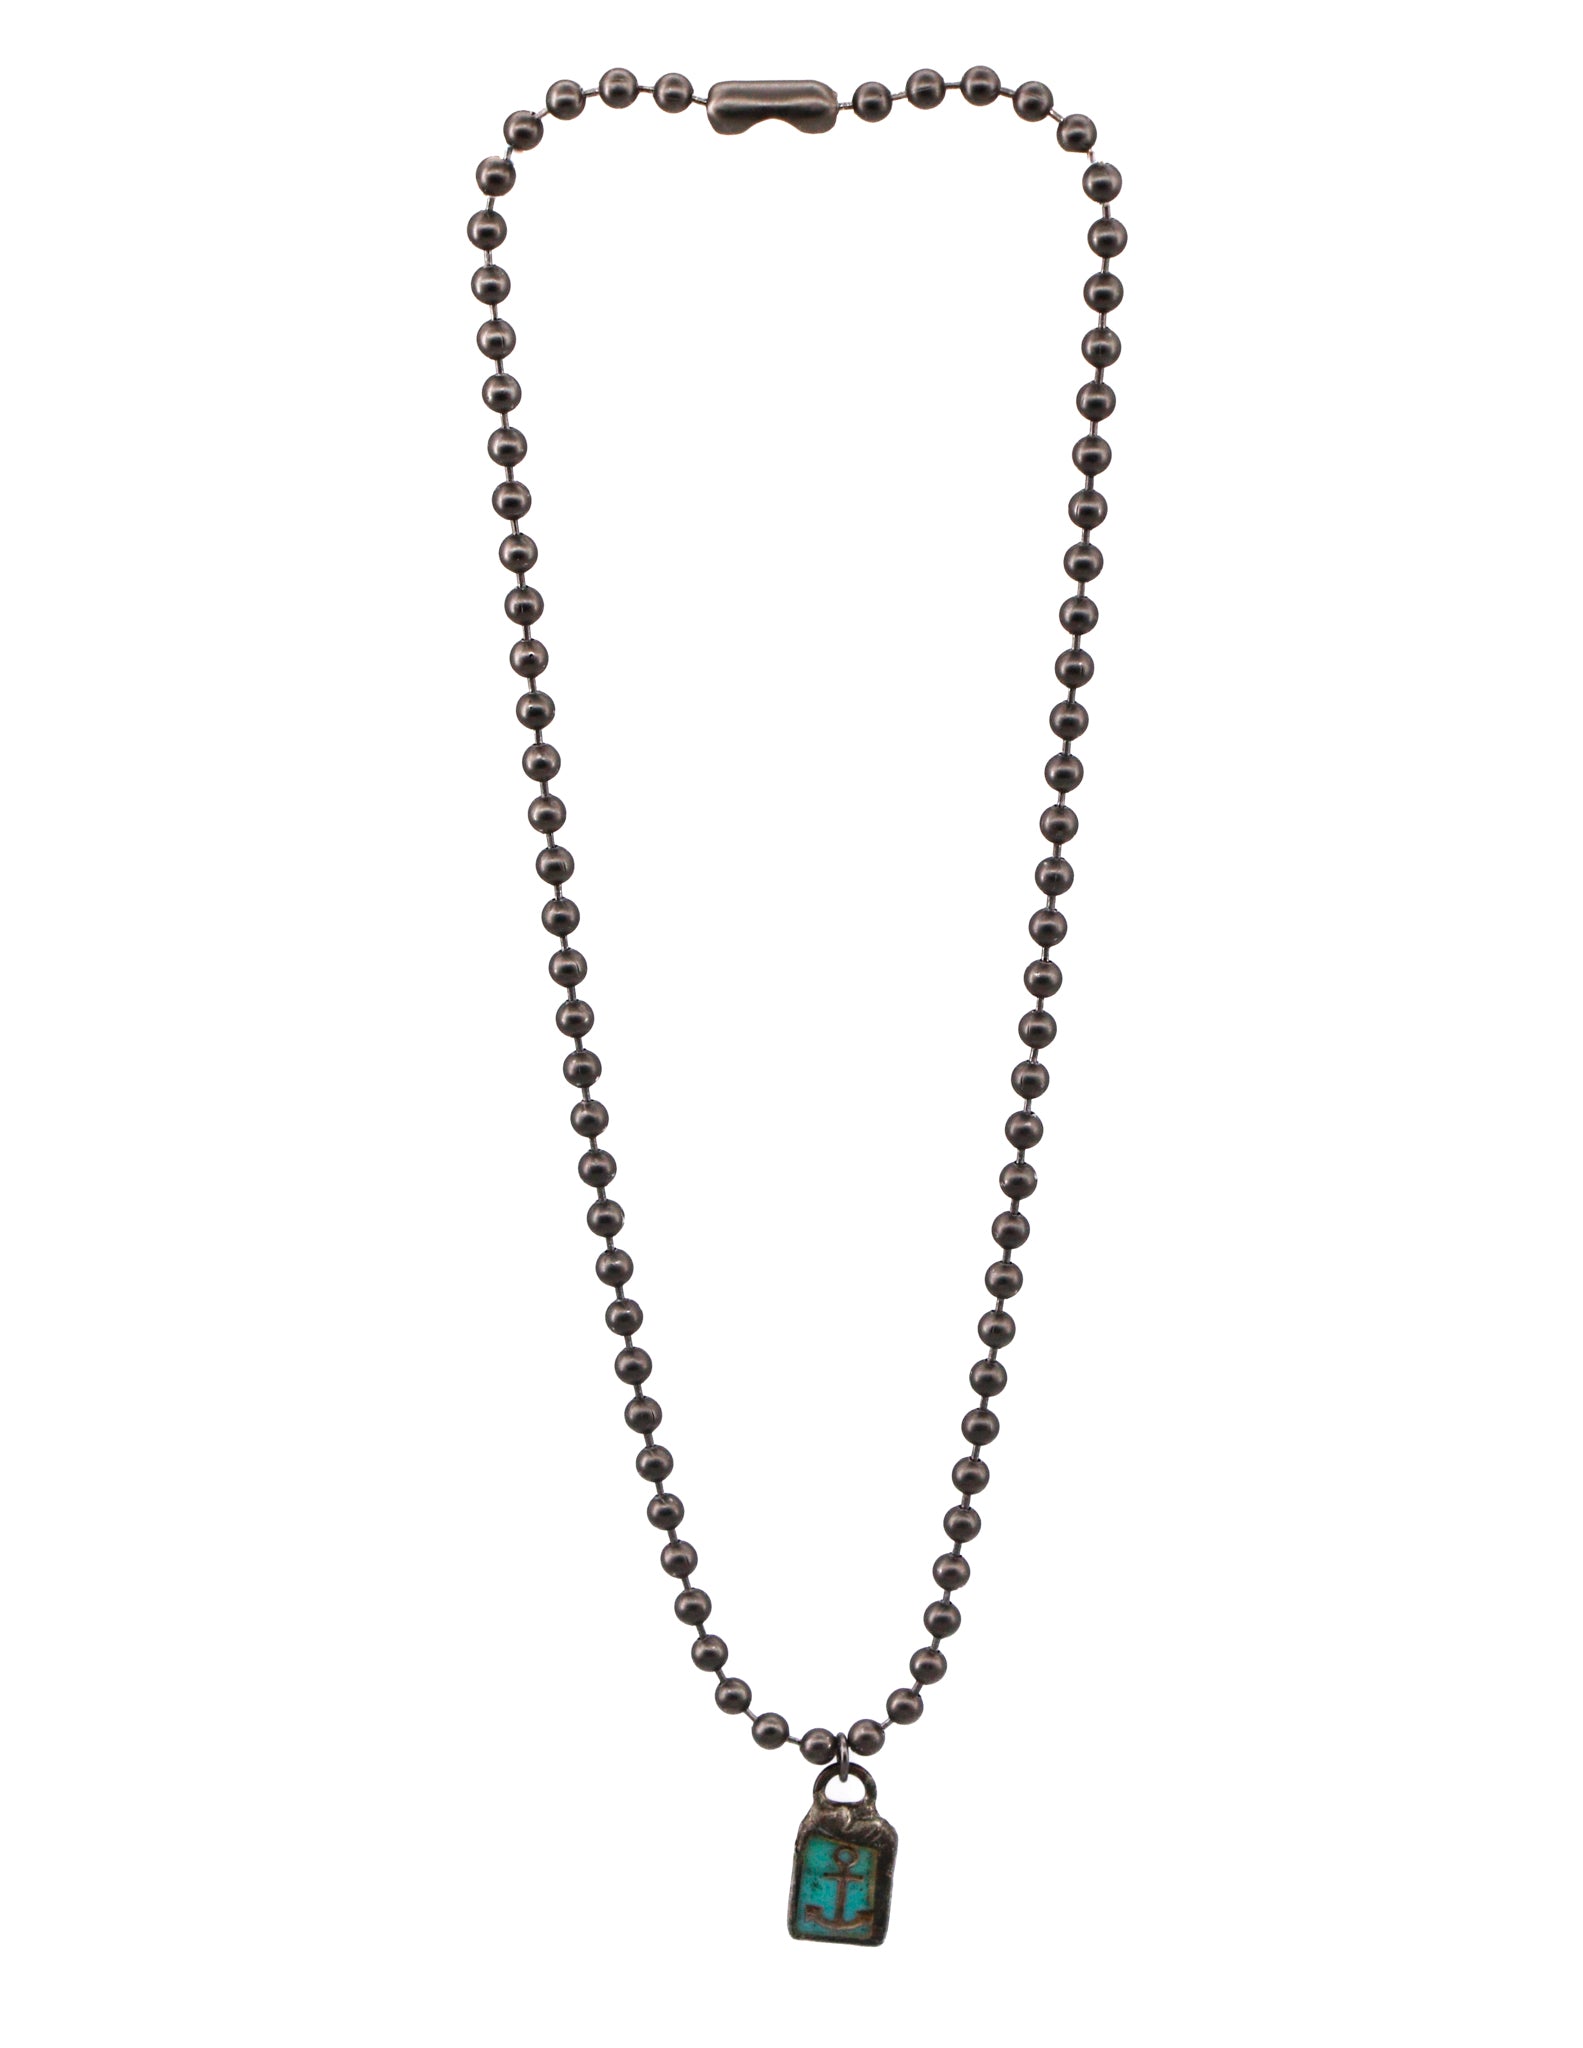 Gun metal ball chain necklace with an anchor pendant